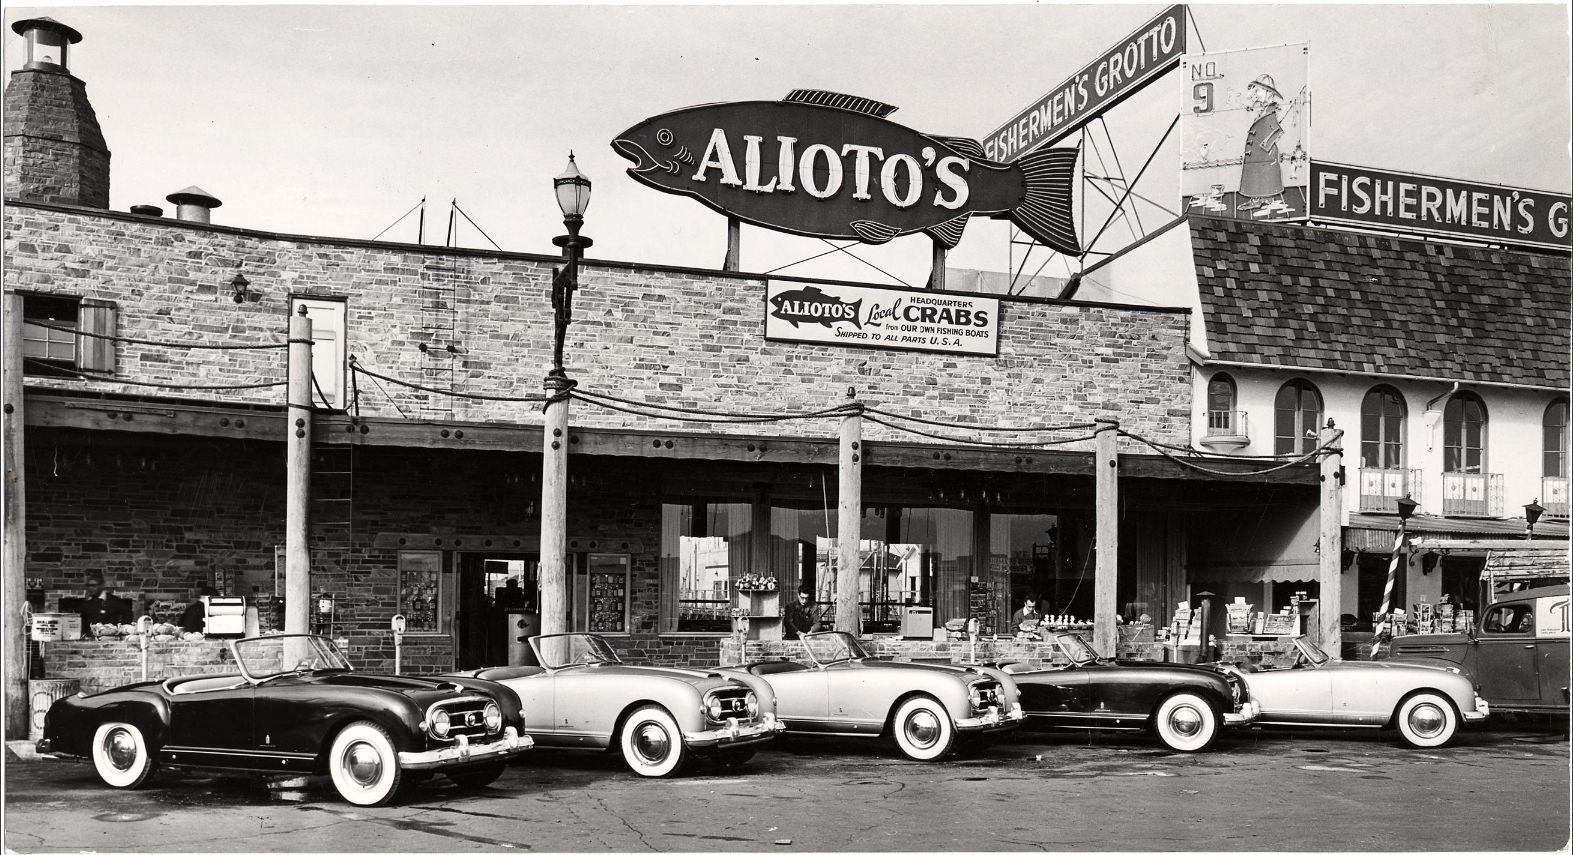 Nash-Healeys parked outside Alioto's restaurant in Fisherman's Wharf, 1953.